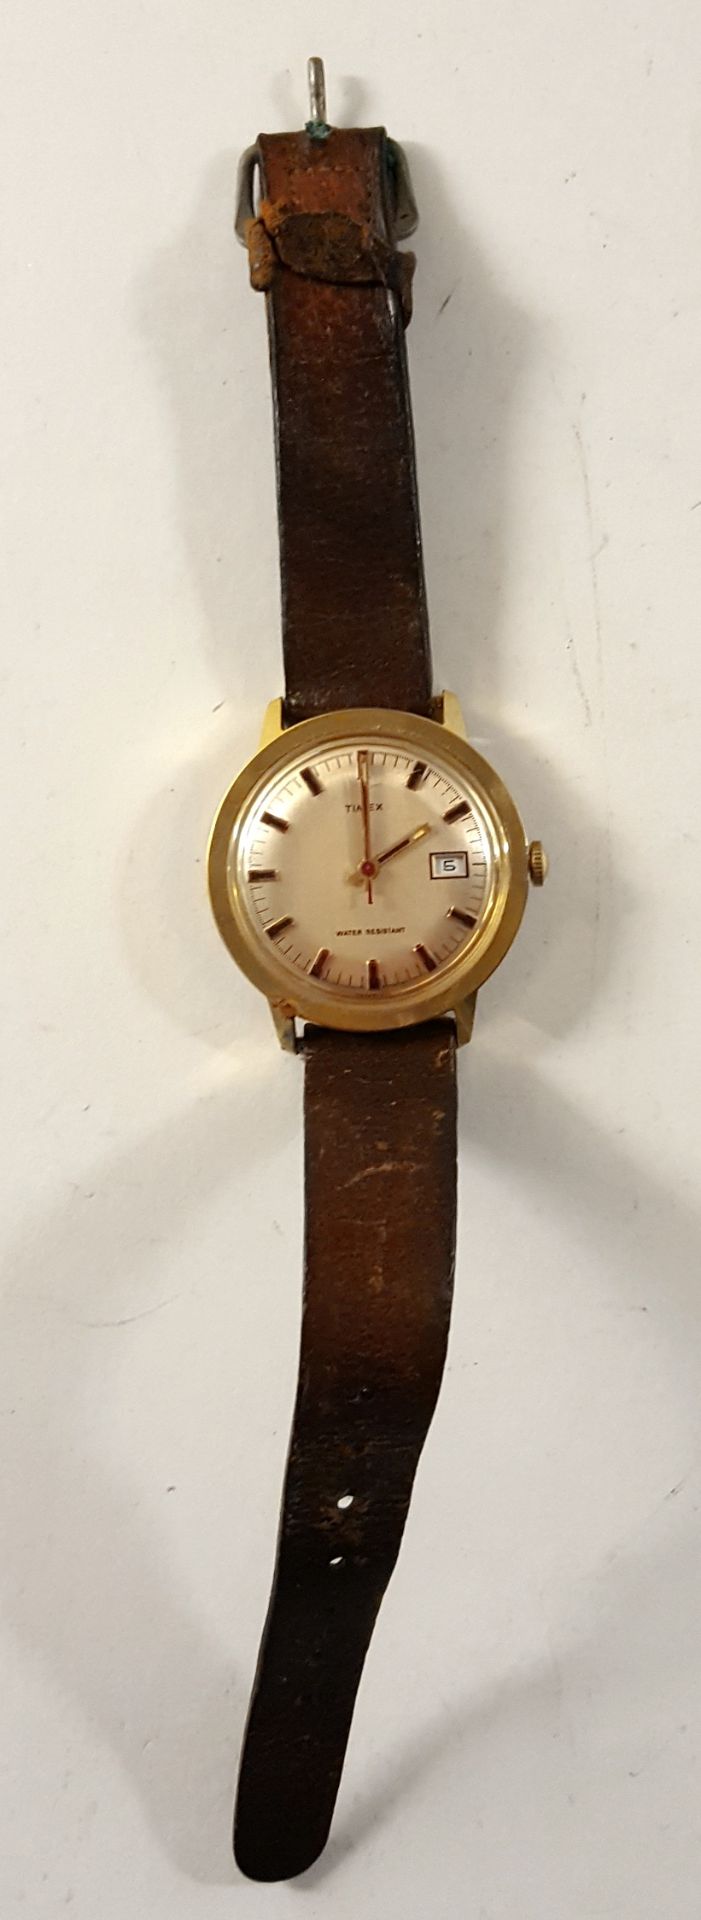 Vintage Retro Timex Wrist Watch - Image 2 of 3